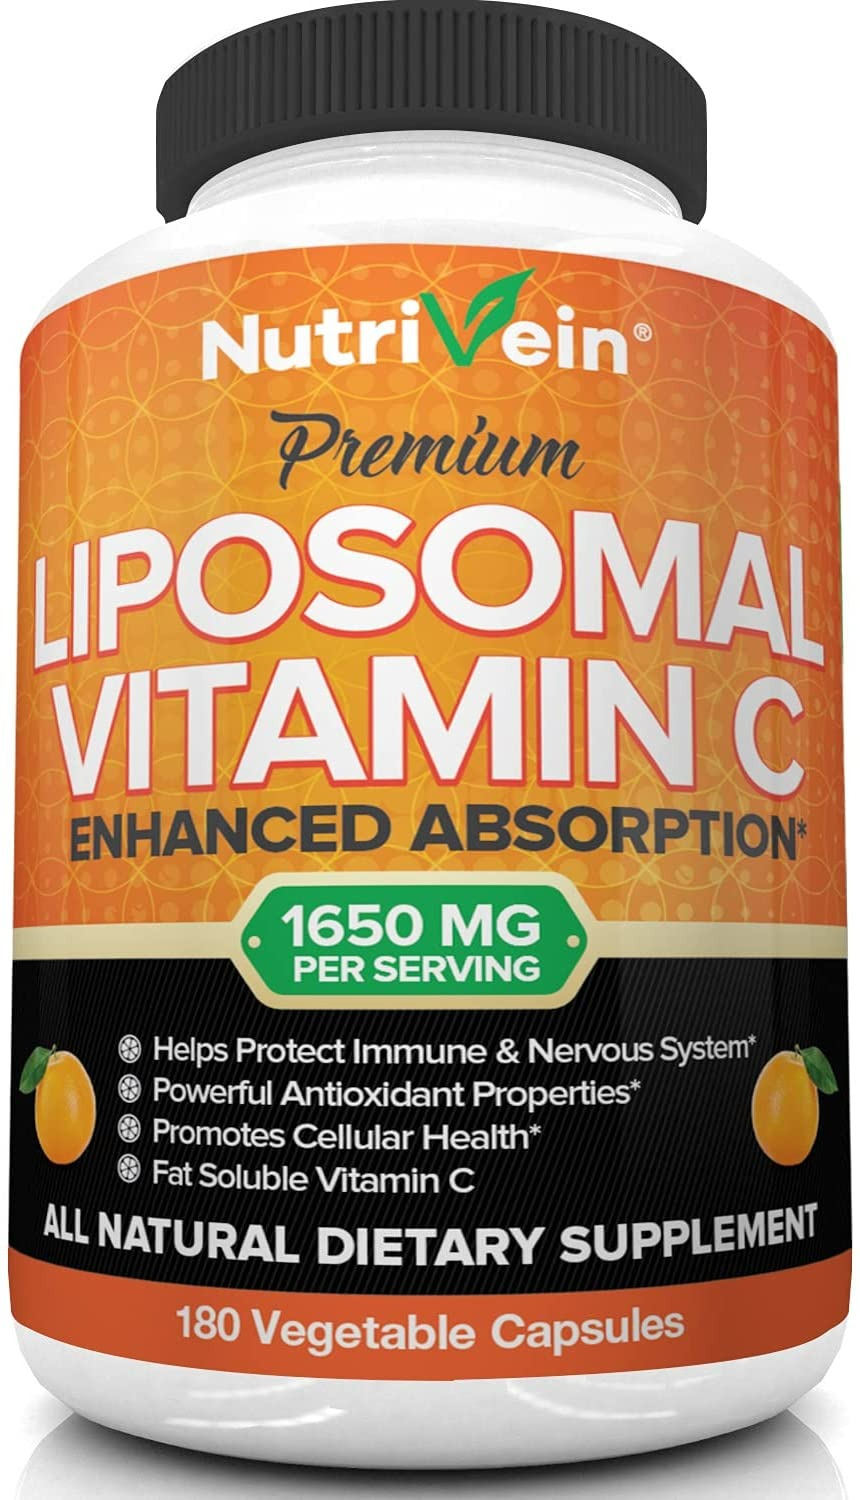 Nutrivein Liposomal Vitamin C - 180 Tablet